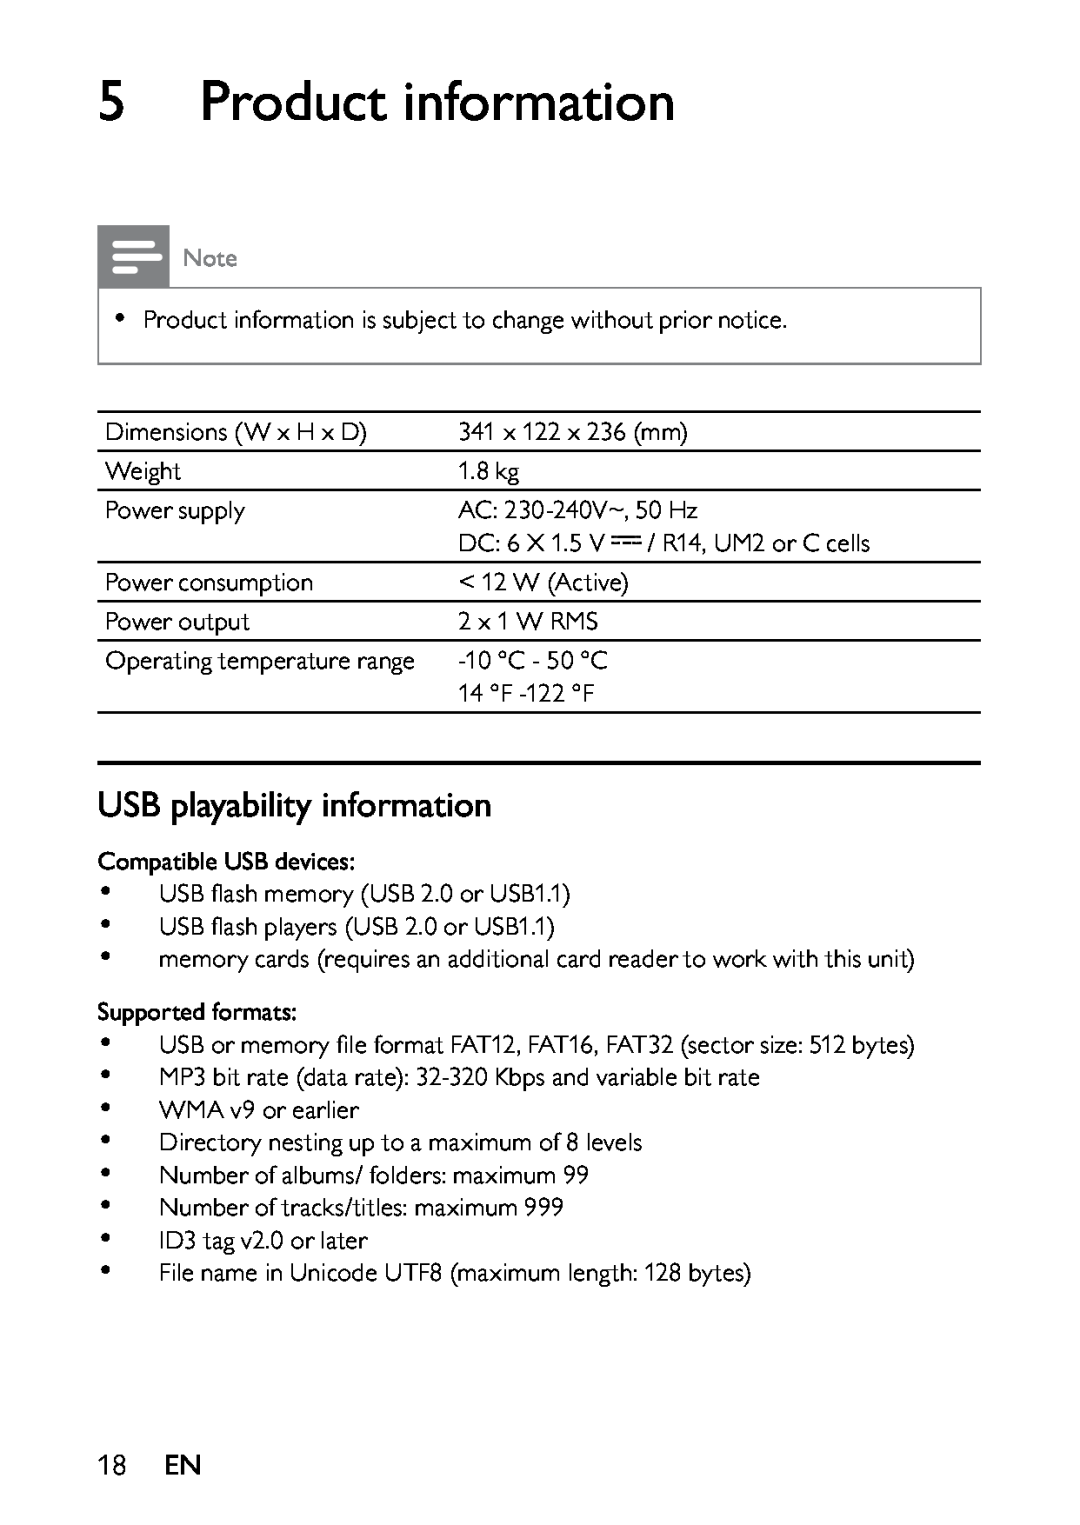 Philips AZ1837 user manual 5Product information, USB playability information, 18EN 